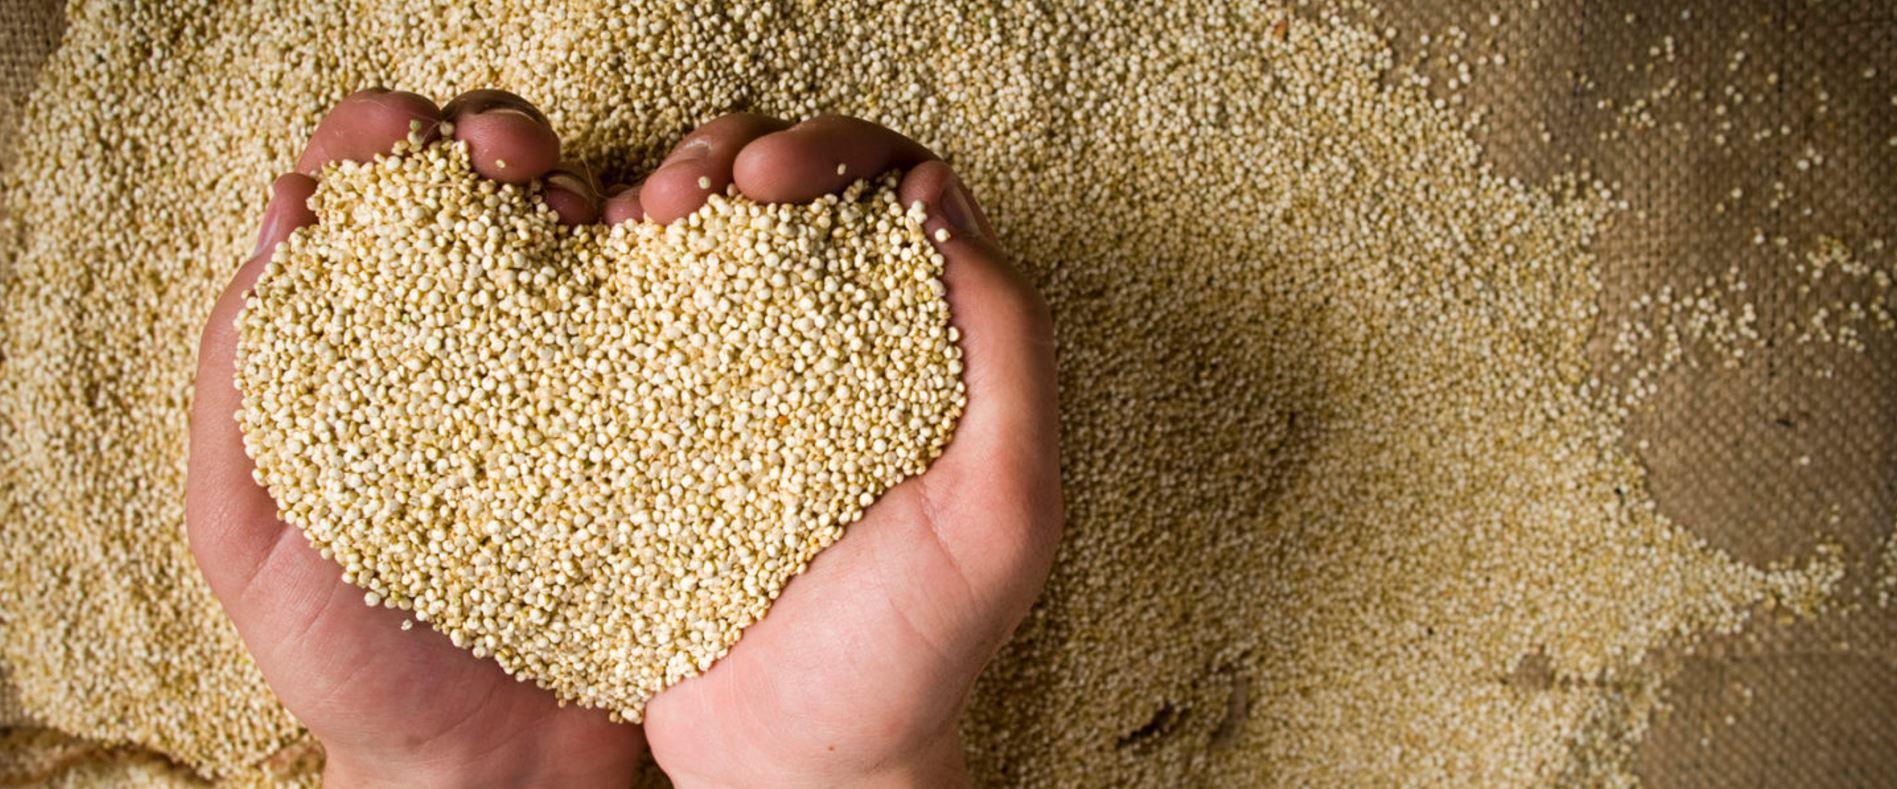 La petite graine qui fait tourner les têtes : Quinoa